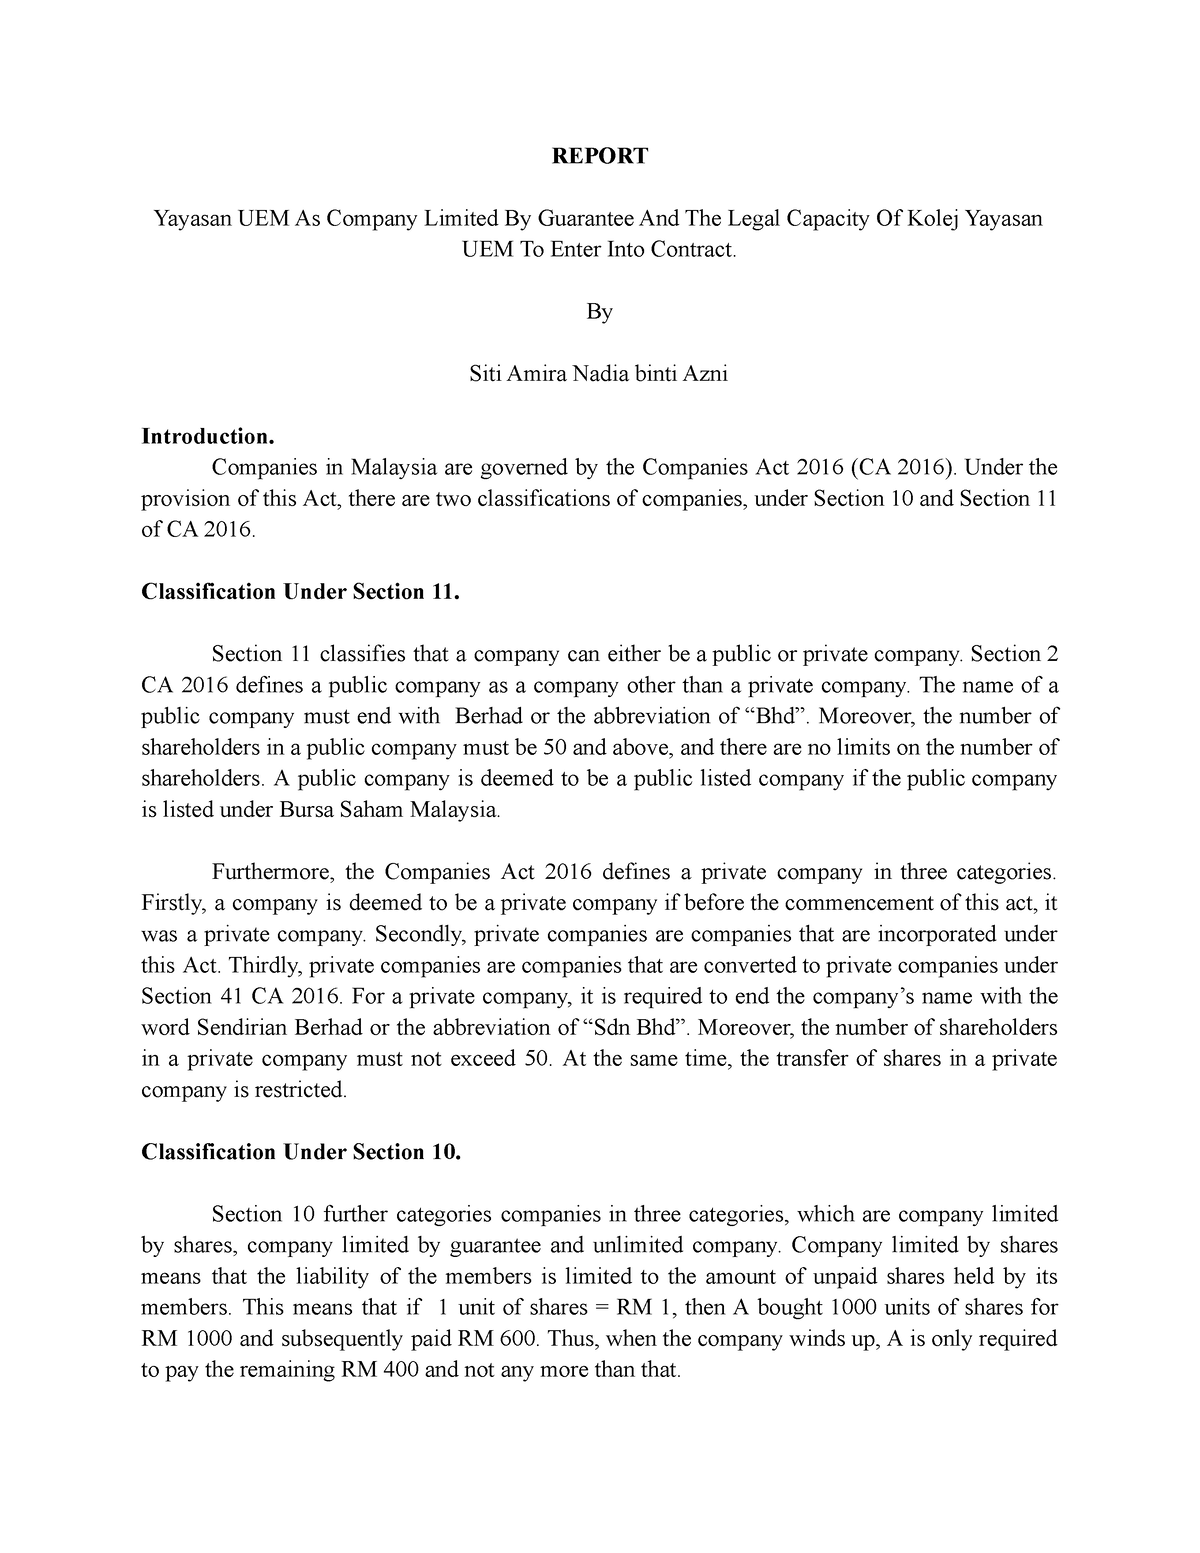 Presentation CLBG Report - REPORT Yayasan UEM As Company Limited By ...